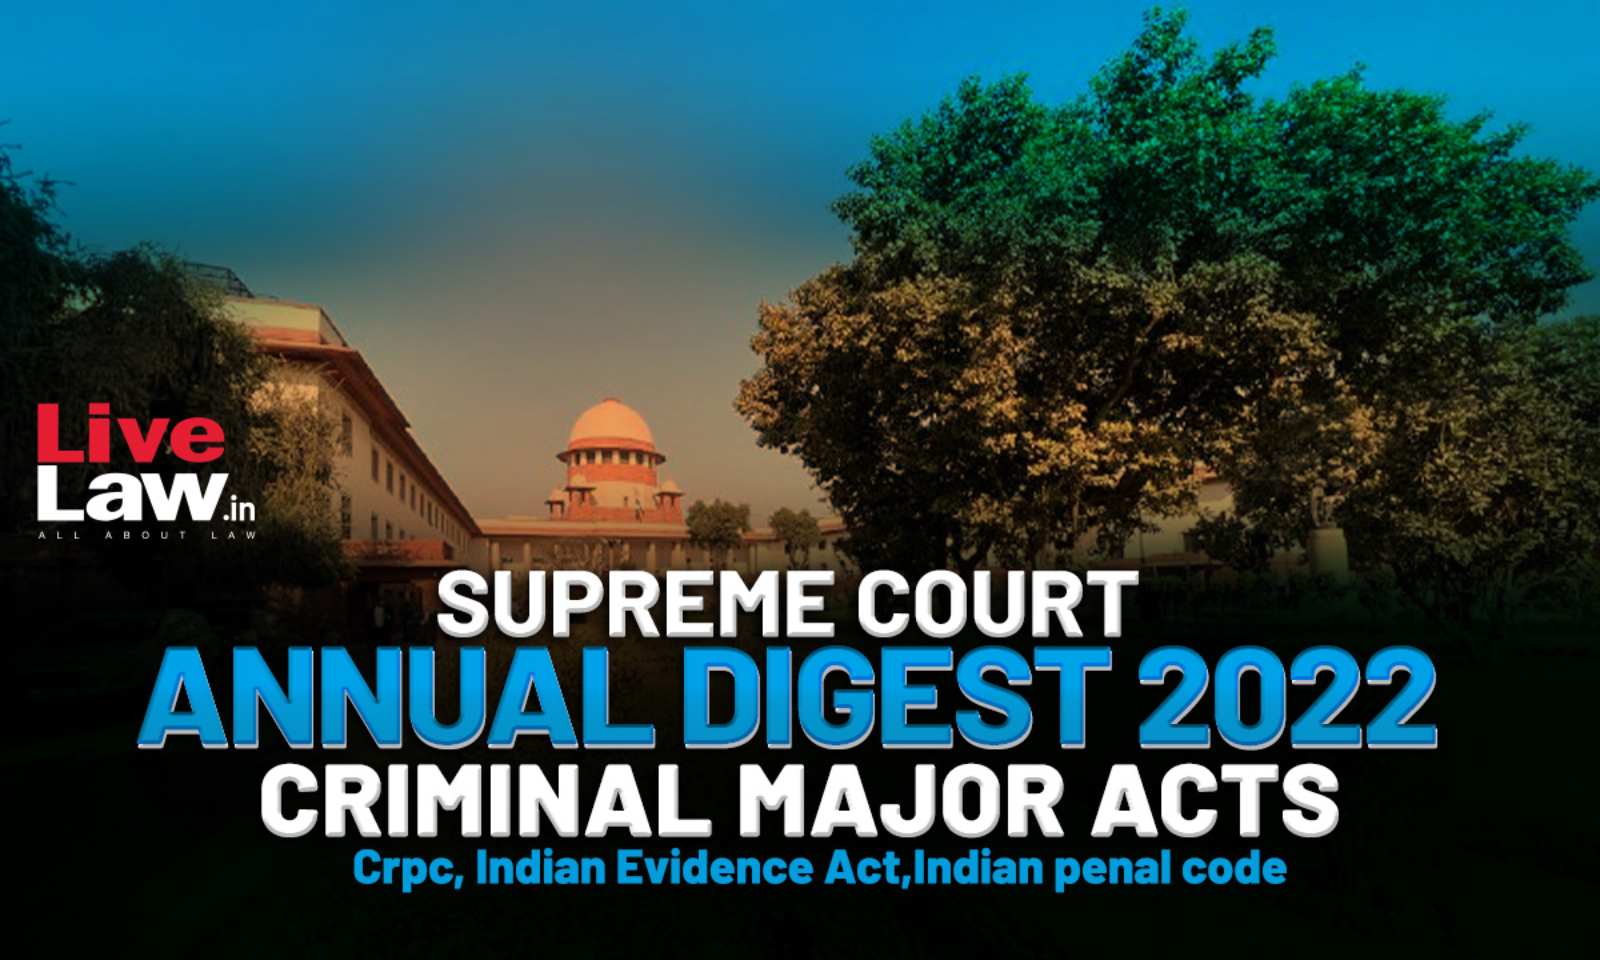 Supreme Court Annual Digest 2022 - Criminal Major Acts